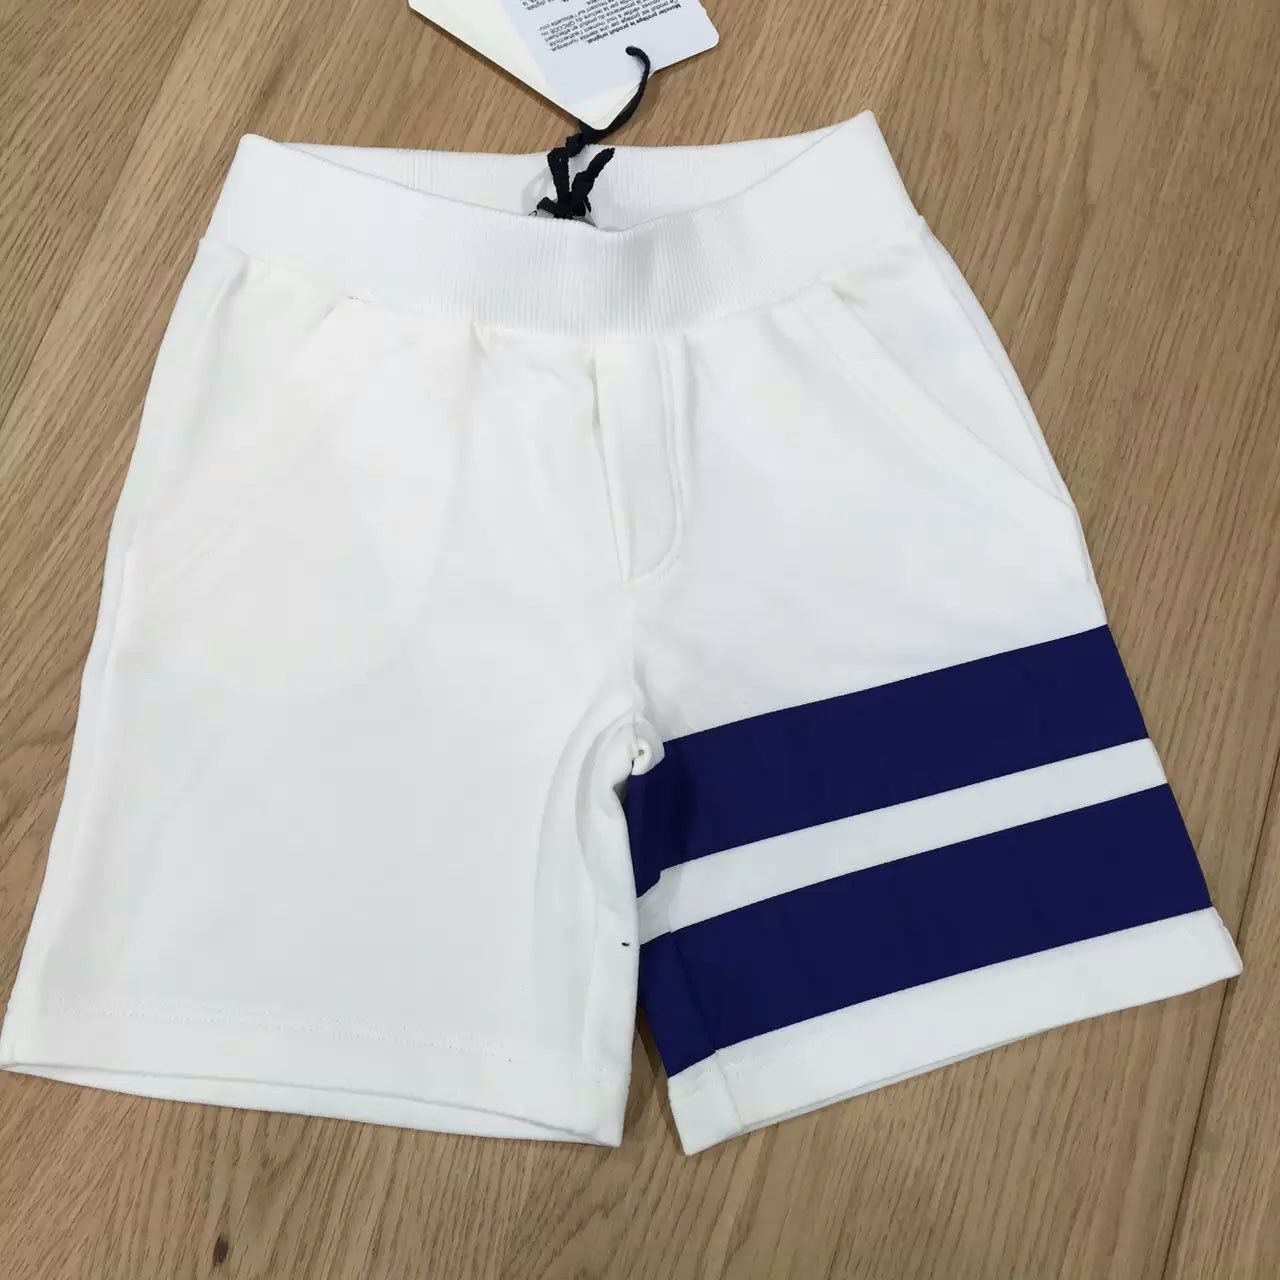 Boys White Cotton Short With Blue Striped Trims - CÉMAROSE | Children's Fashion Store